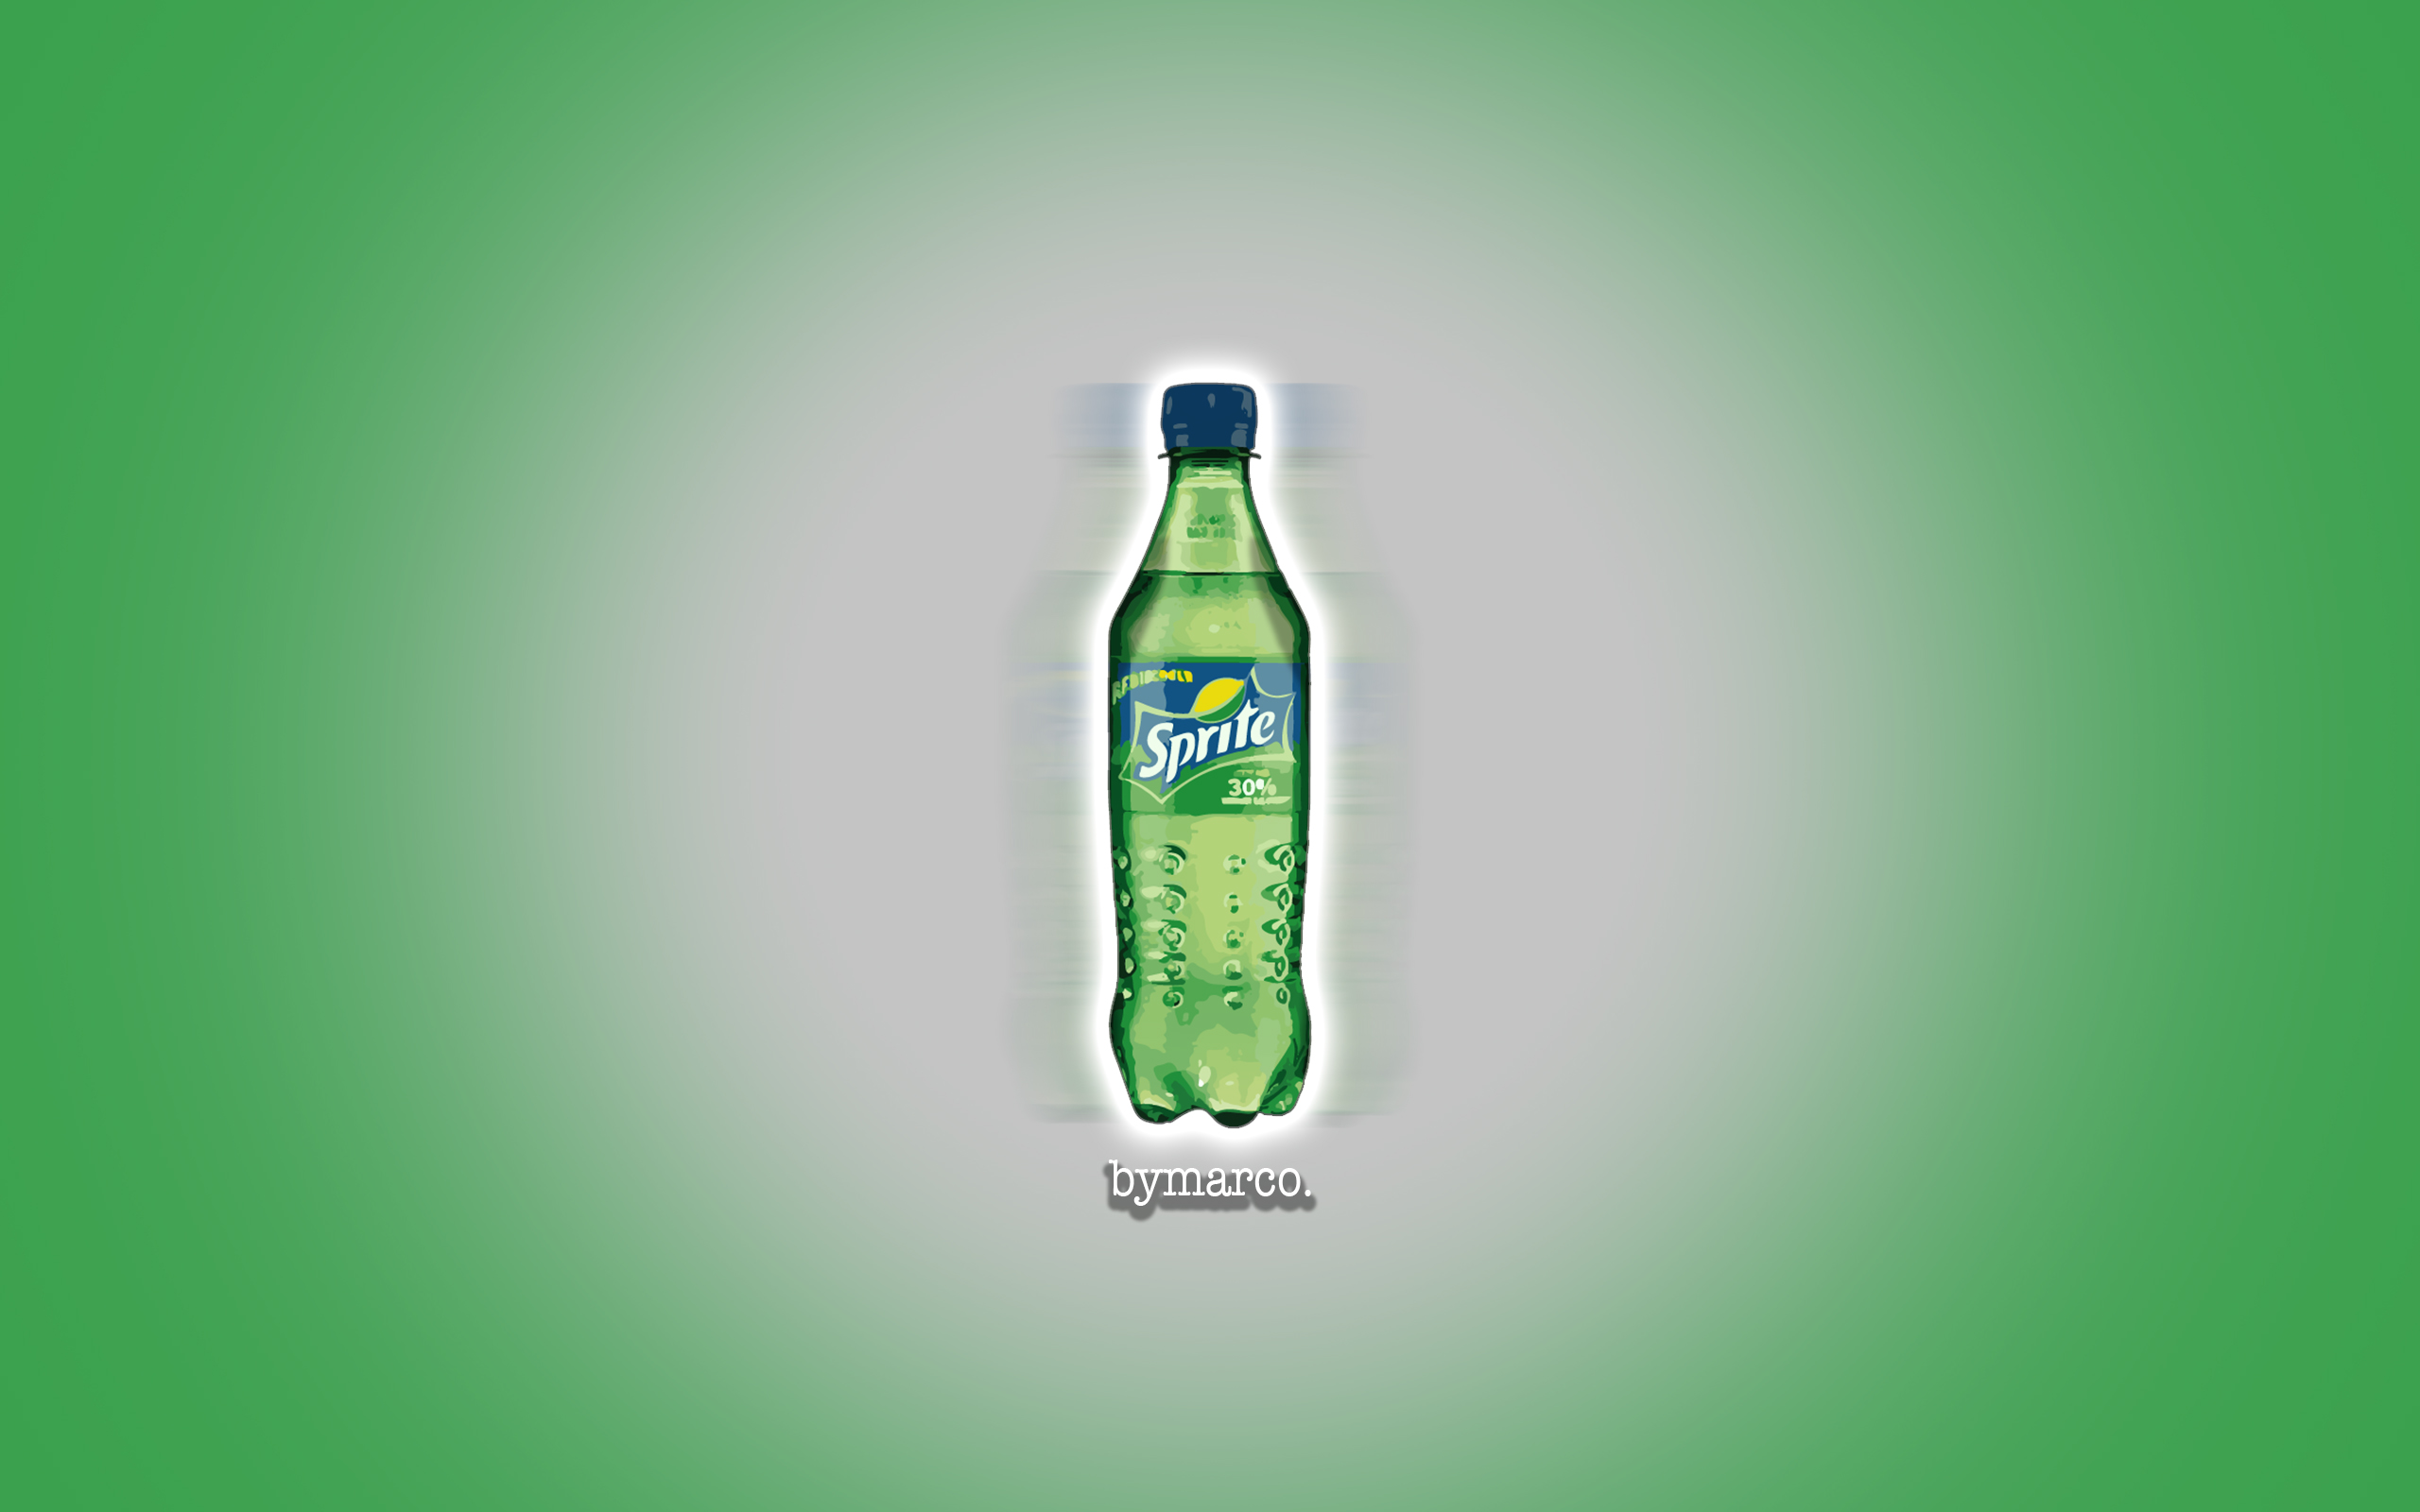 General 2560x1600 food drink illustration photoshopped Sprite (drink) digital art simple background watermarked